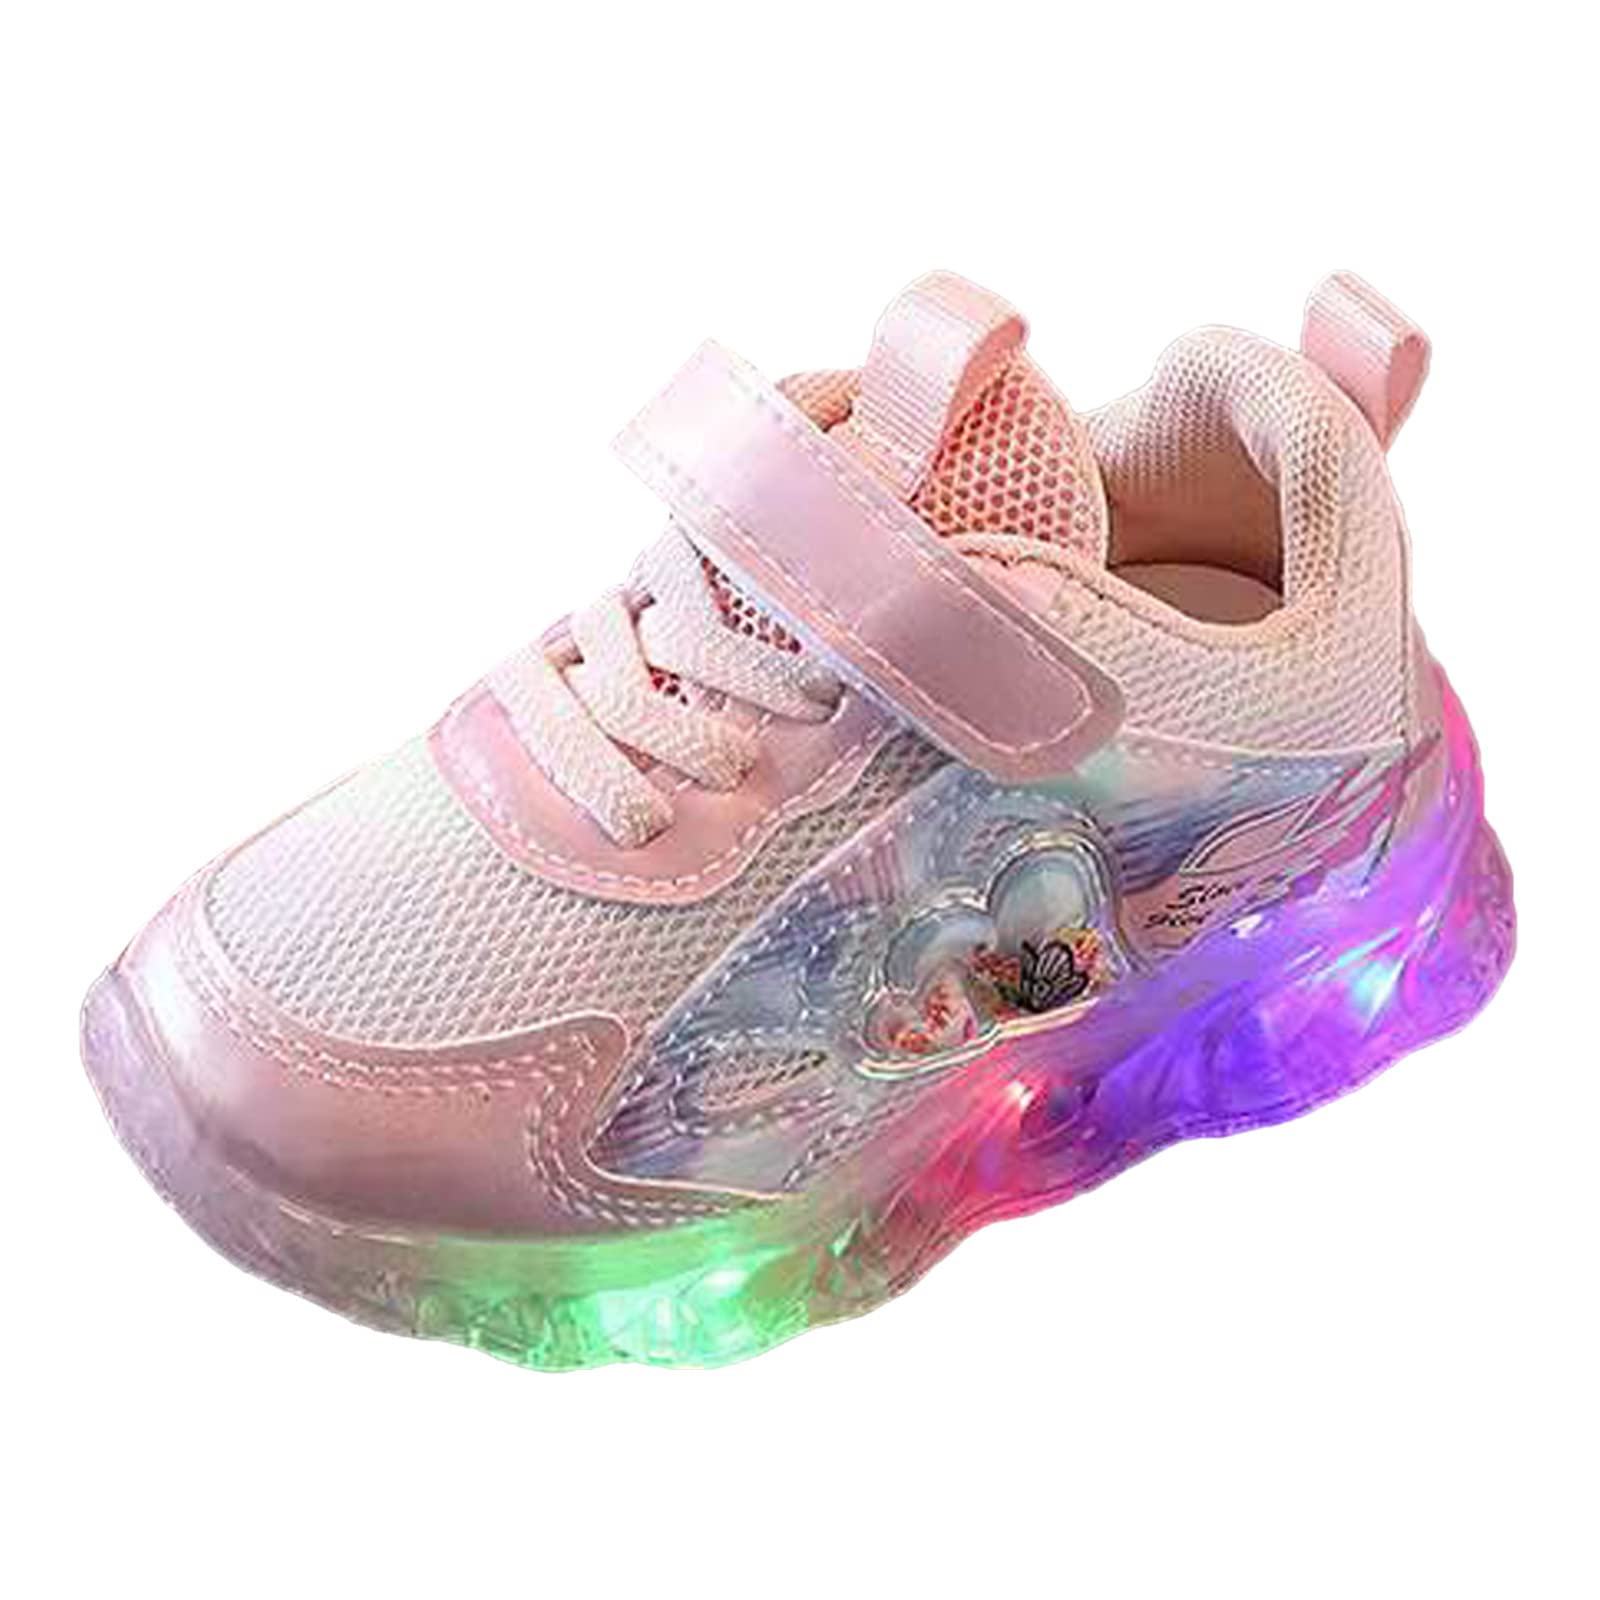 Girls Gyms Shoes Light Up Shoes for Girls Toddler Led Walking Girls Kids Children Toddler Shoes Size 5 Girls